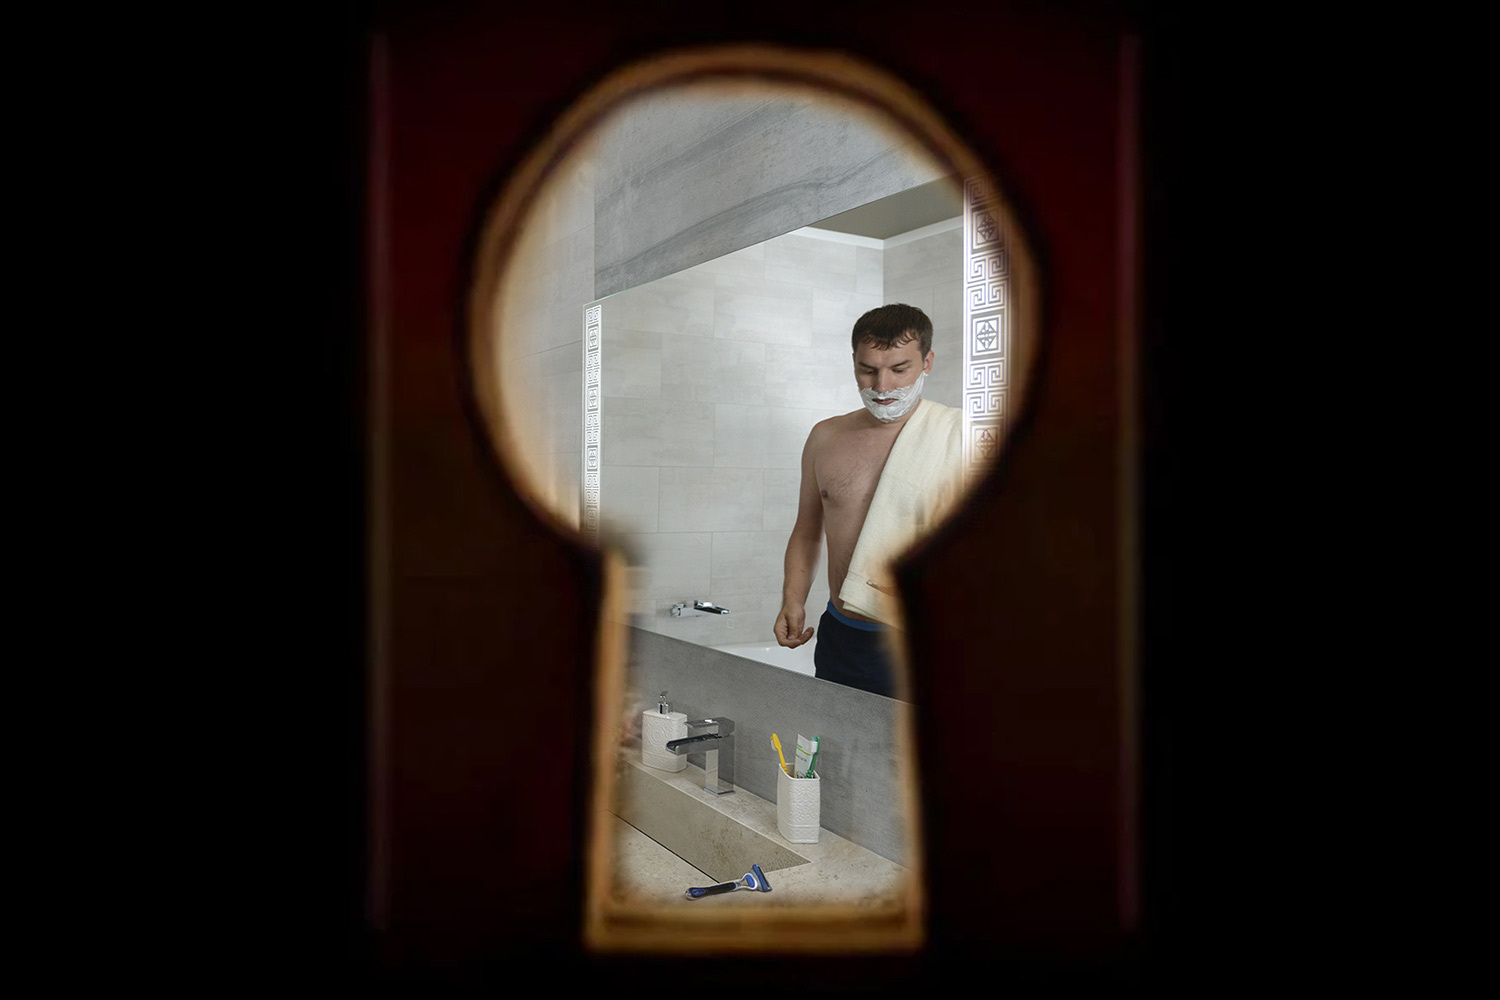 Скрытые камеры в общественных туалетах: новые жертвы